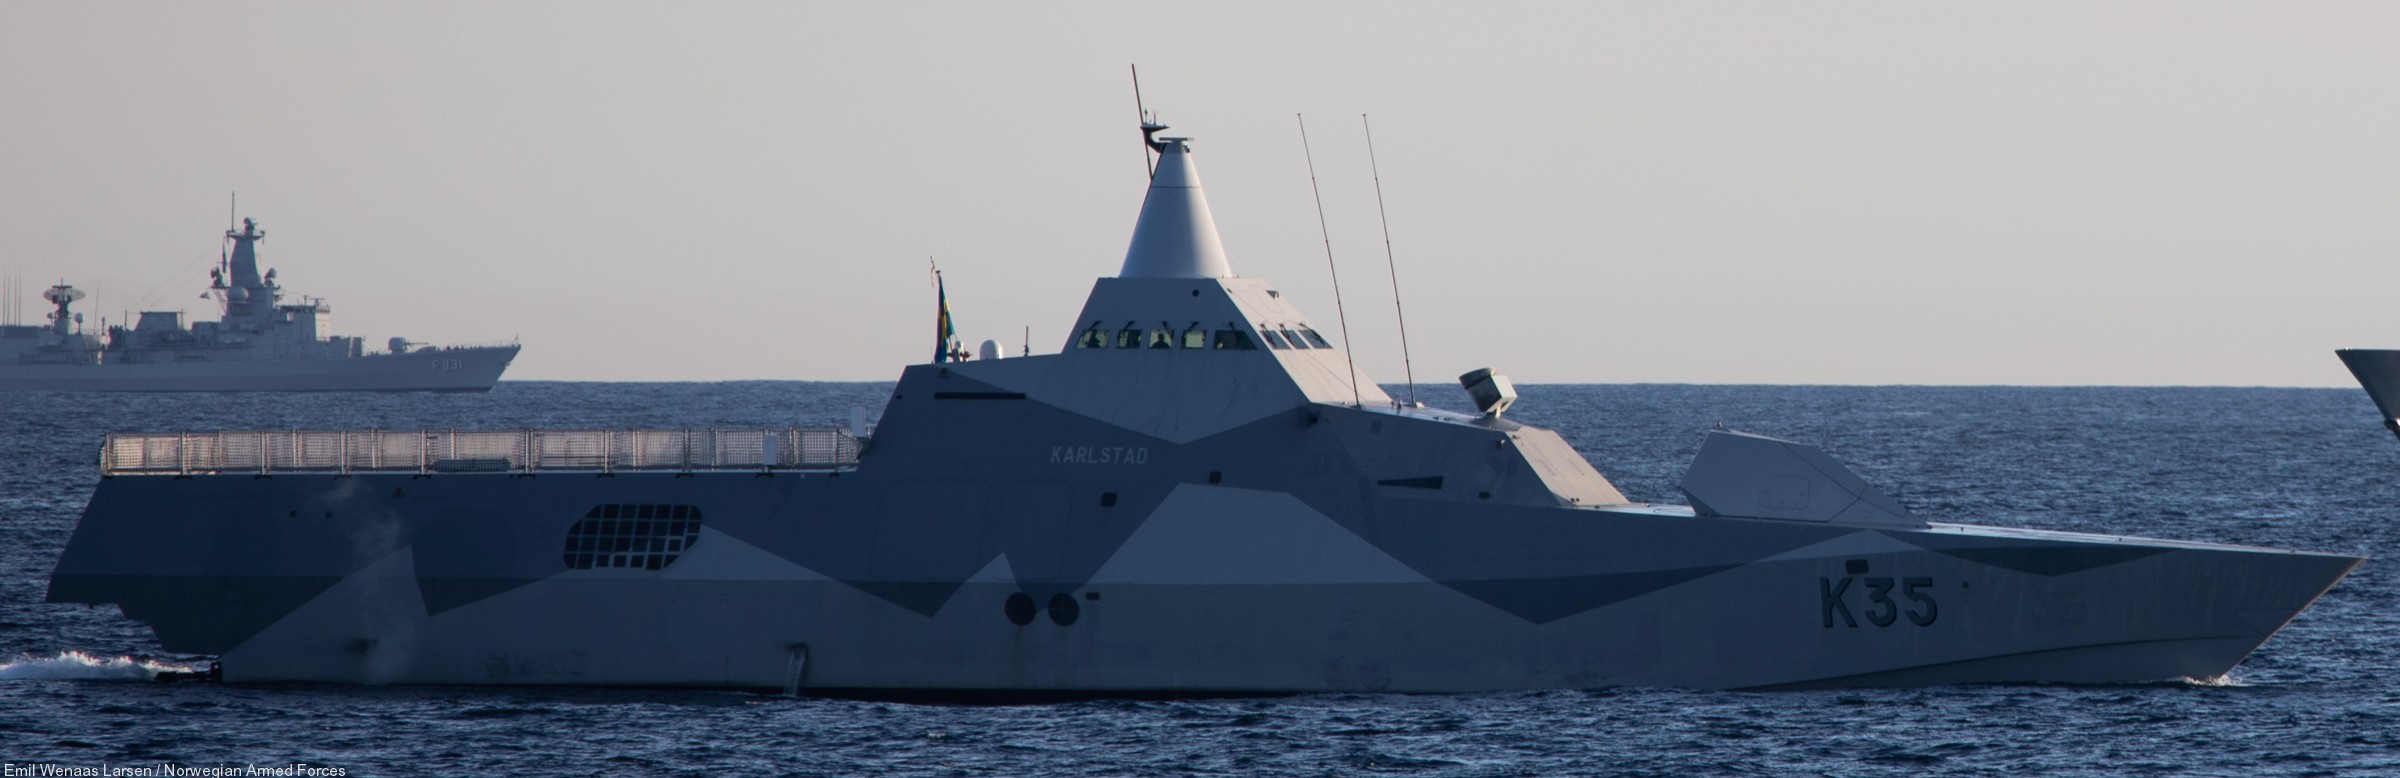 k35 hswms hms karlstad visby class corvette royal swedish navy svenska marinen 05